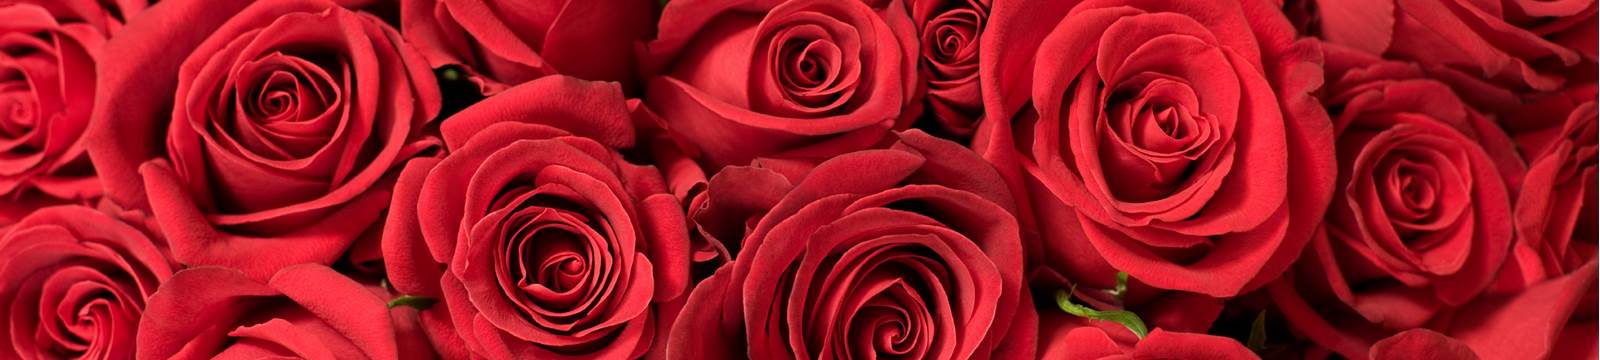 Roses Valentine's Day